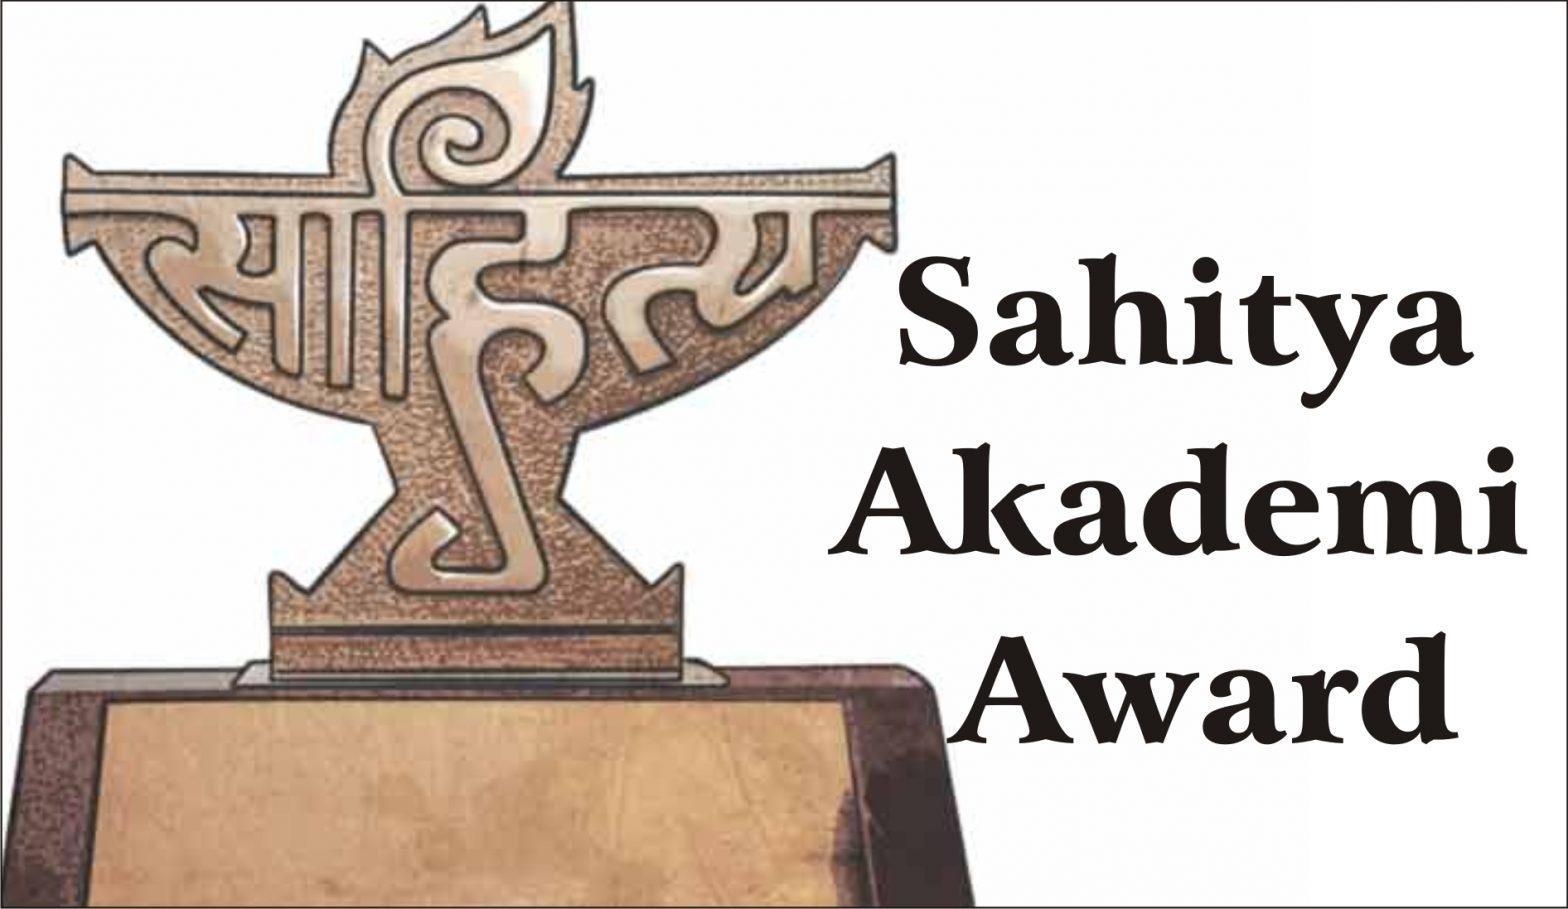 Sahitya Akademi Award 2021 Announced